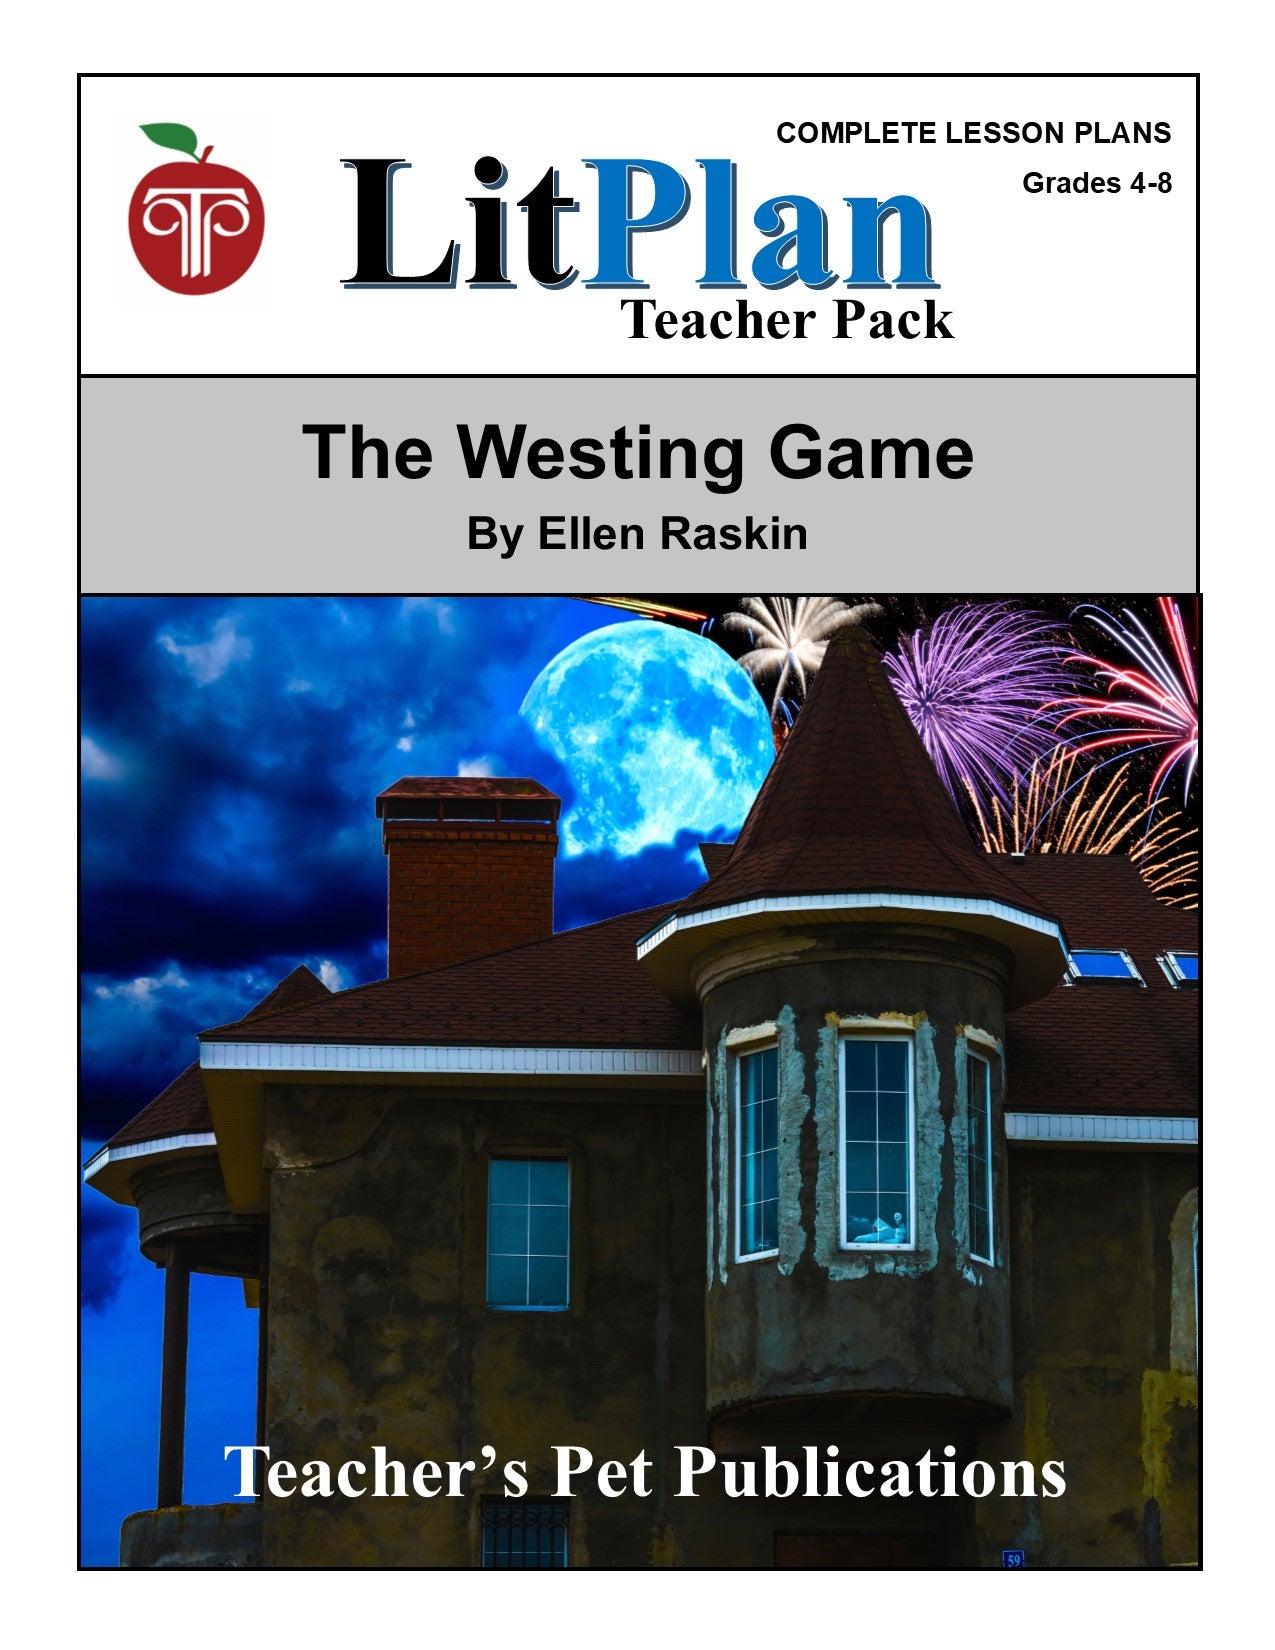 The Westing Game: LitPlan Teacher Pack Grades 4-8